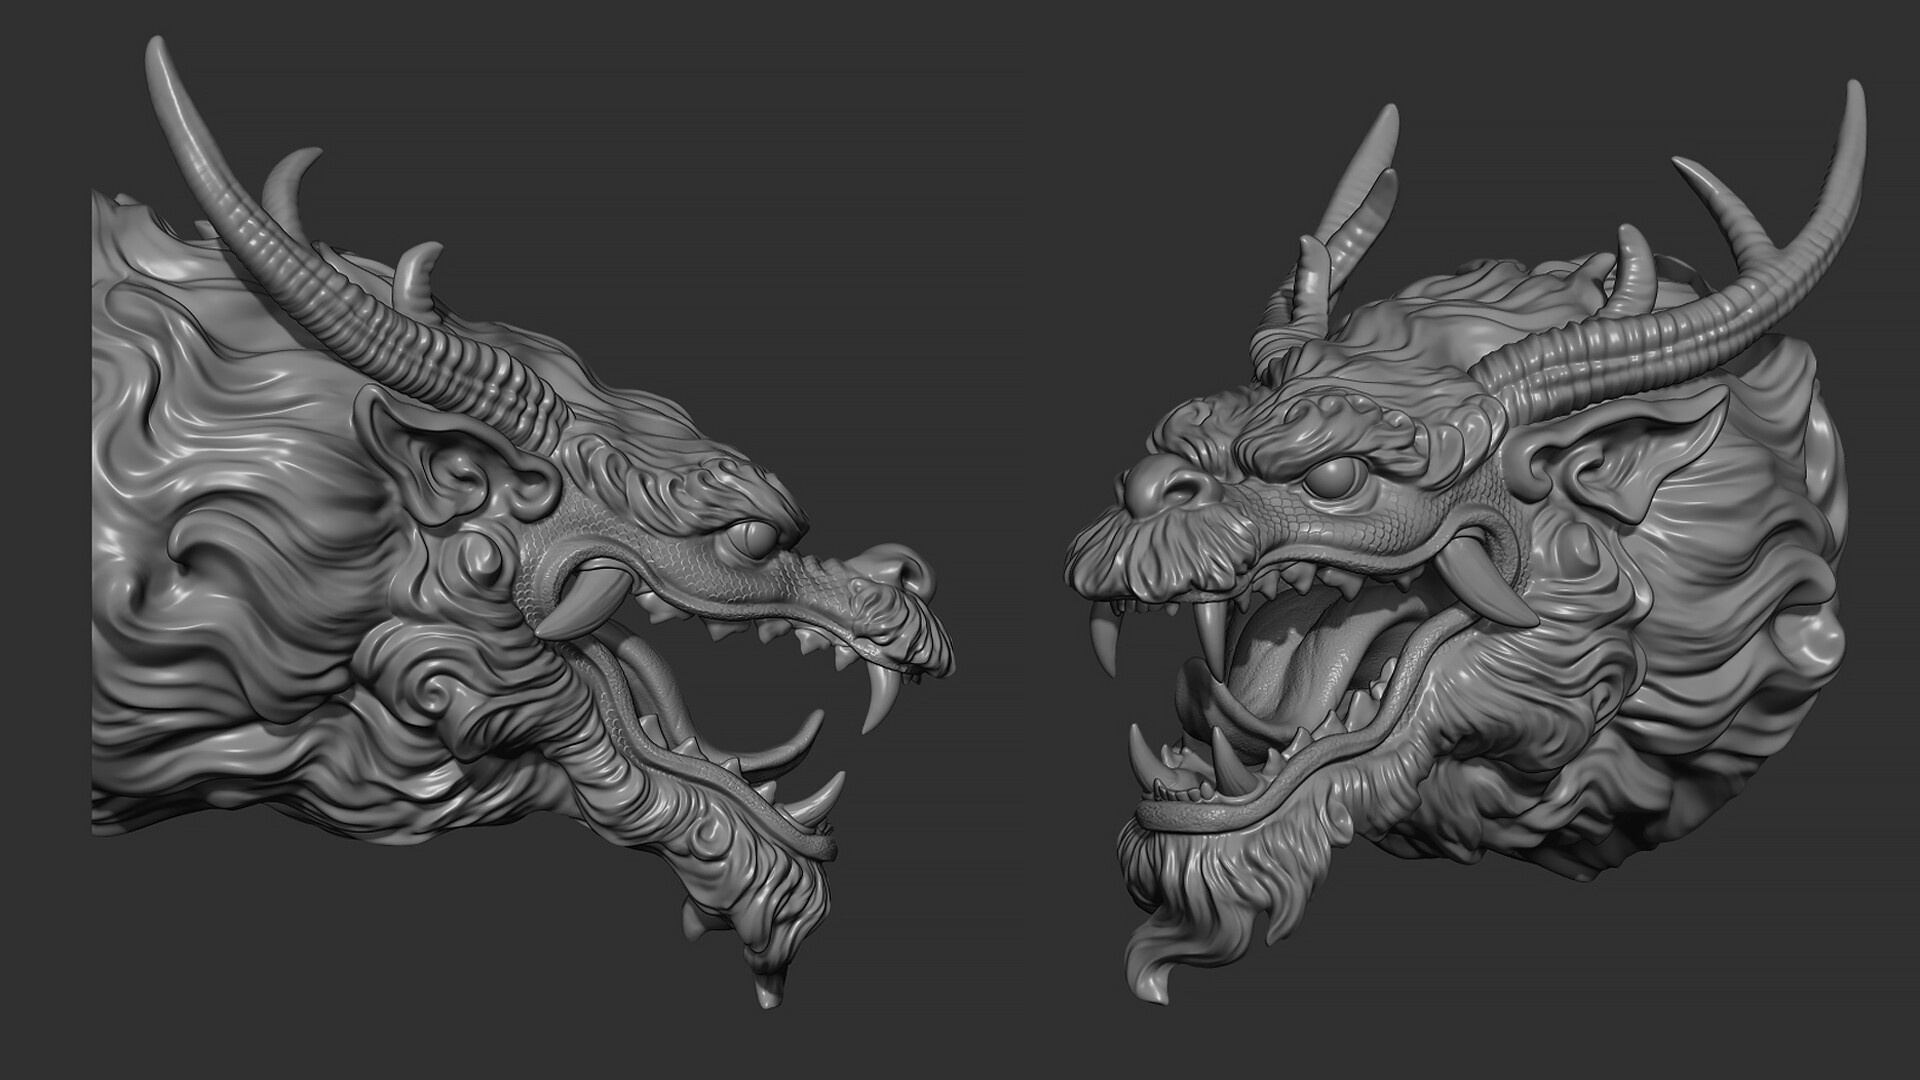 ArtStation - Chinese dragon head